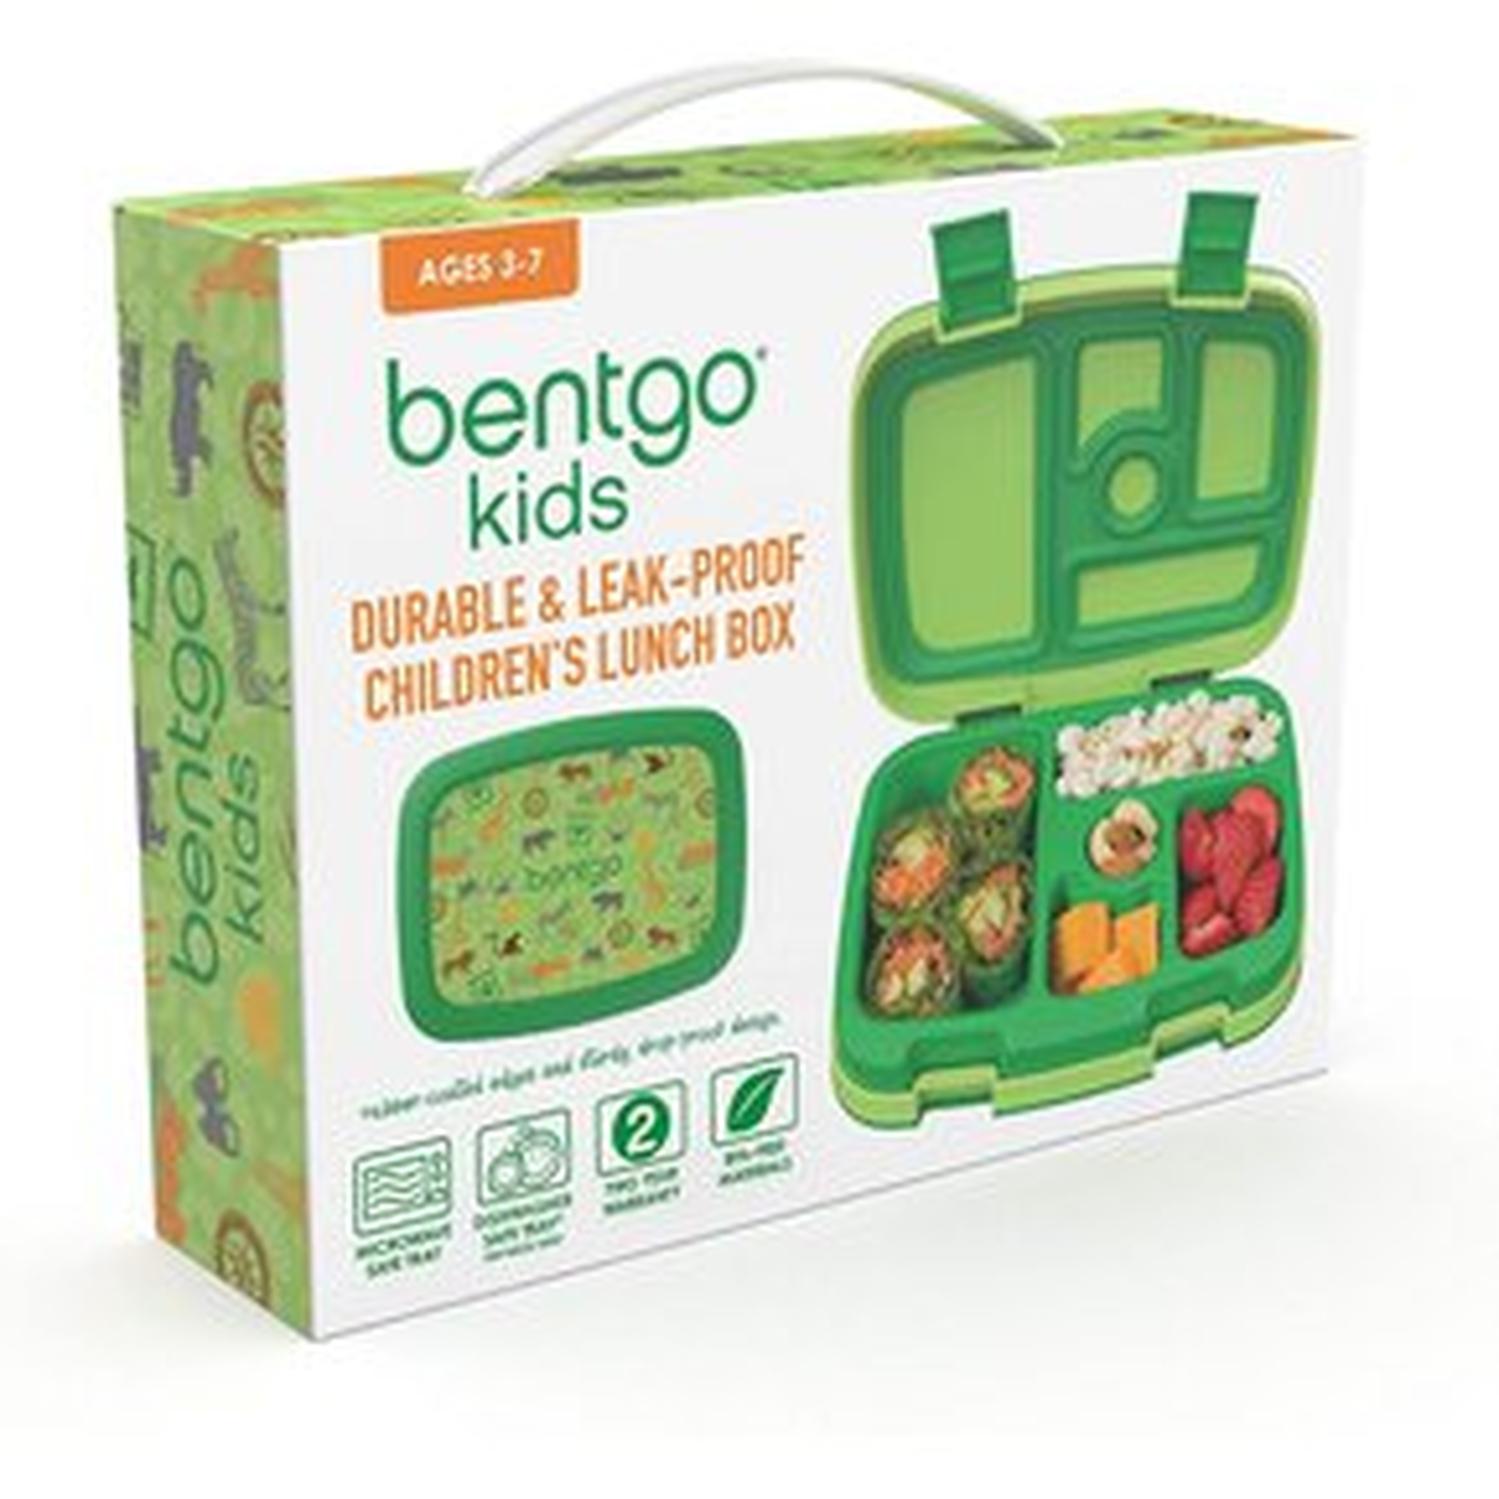 Lonchera Bentgo Kids Lunch Box - Animalitos de la Selva